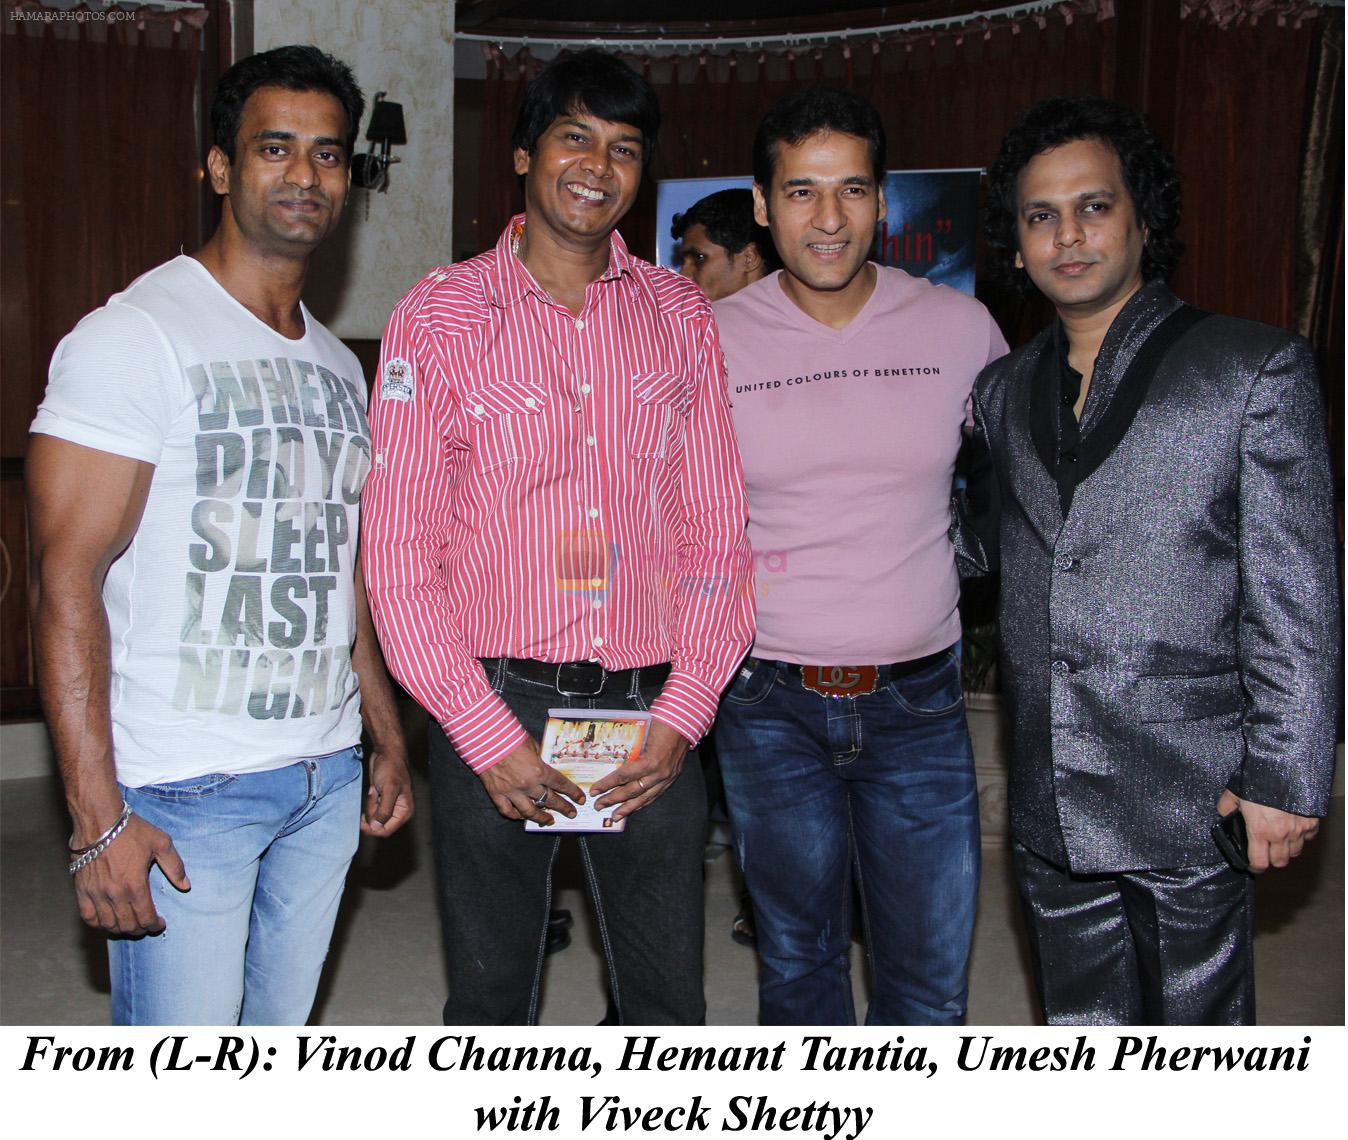 Vinod Channa, Hemant Tantia, Umesh Pherwani with Viveck Shettyy at a musical tribute to Sachin Tendulkar by Hemant Tantia in Mumbai on 24th April 2012